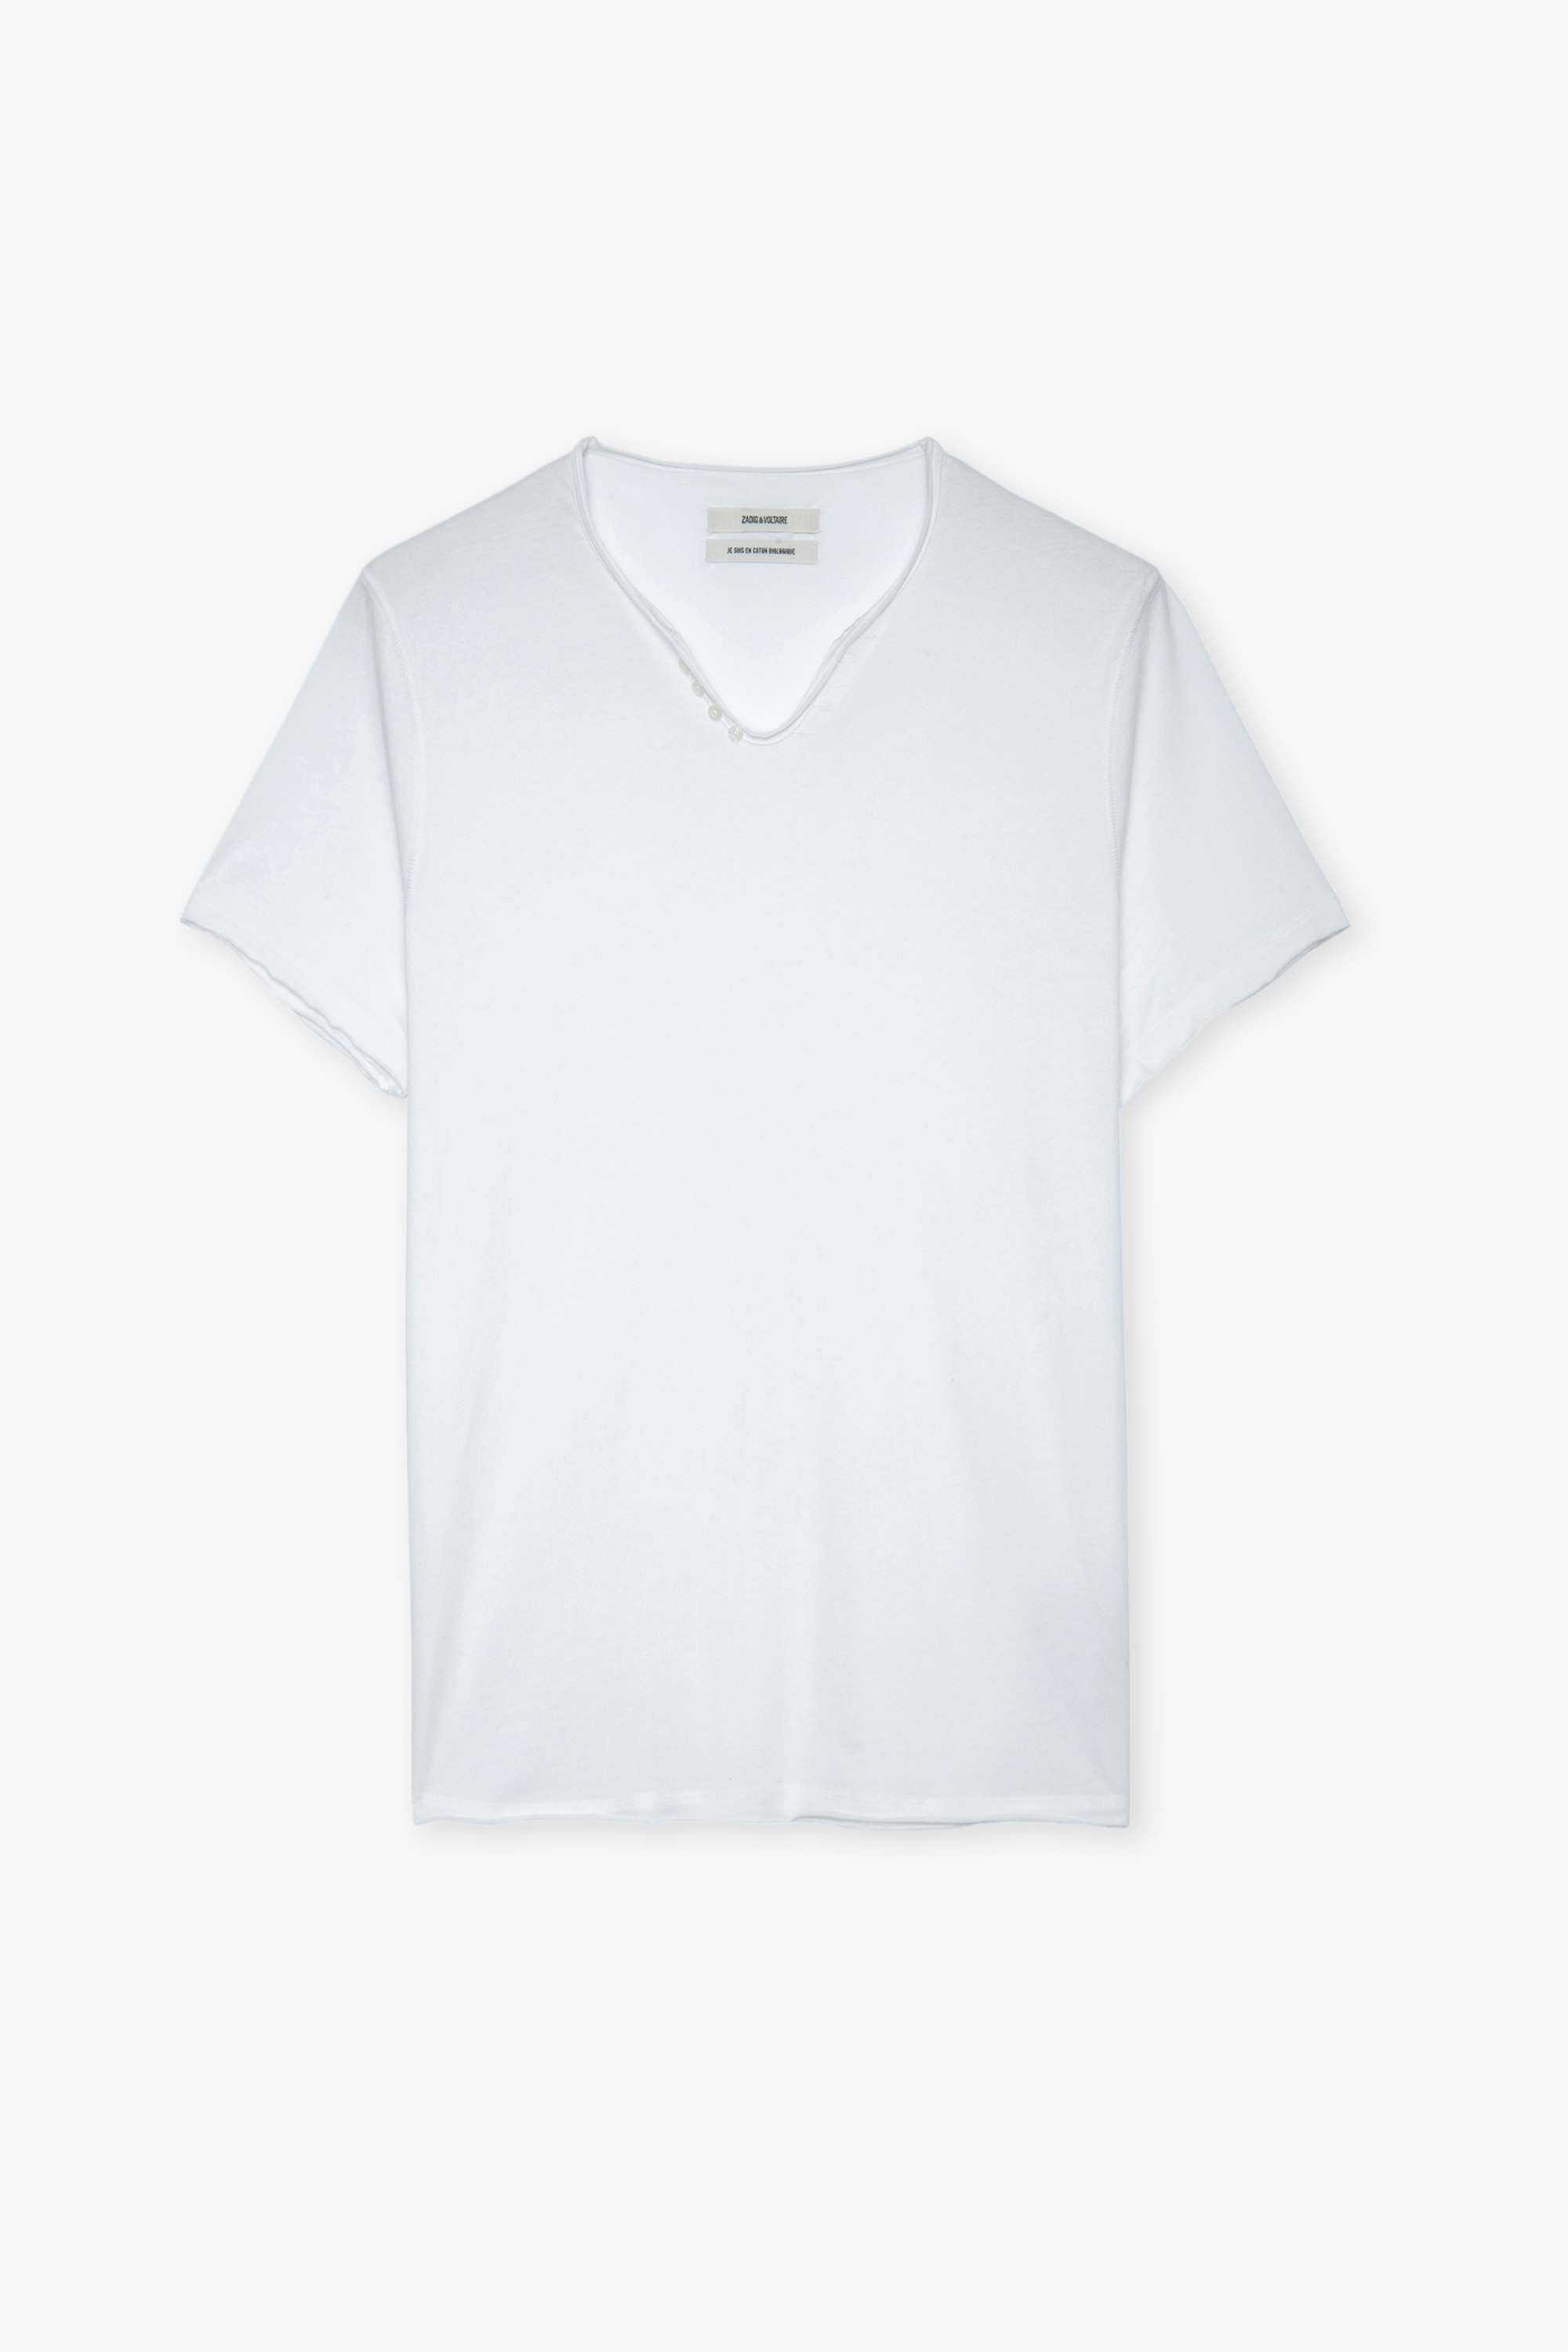 Tunisien Monastir - T-shirt blanc.